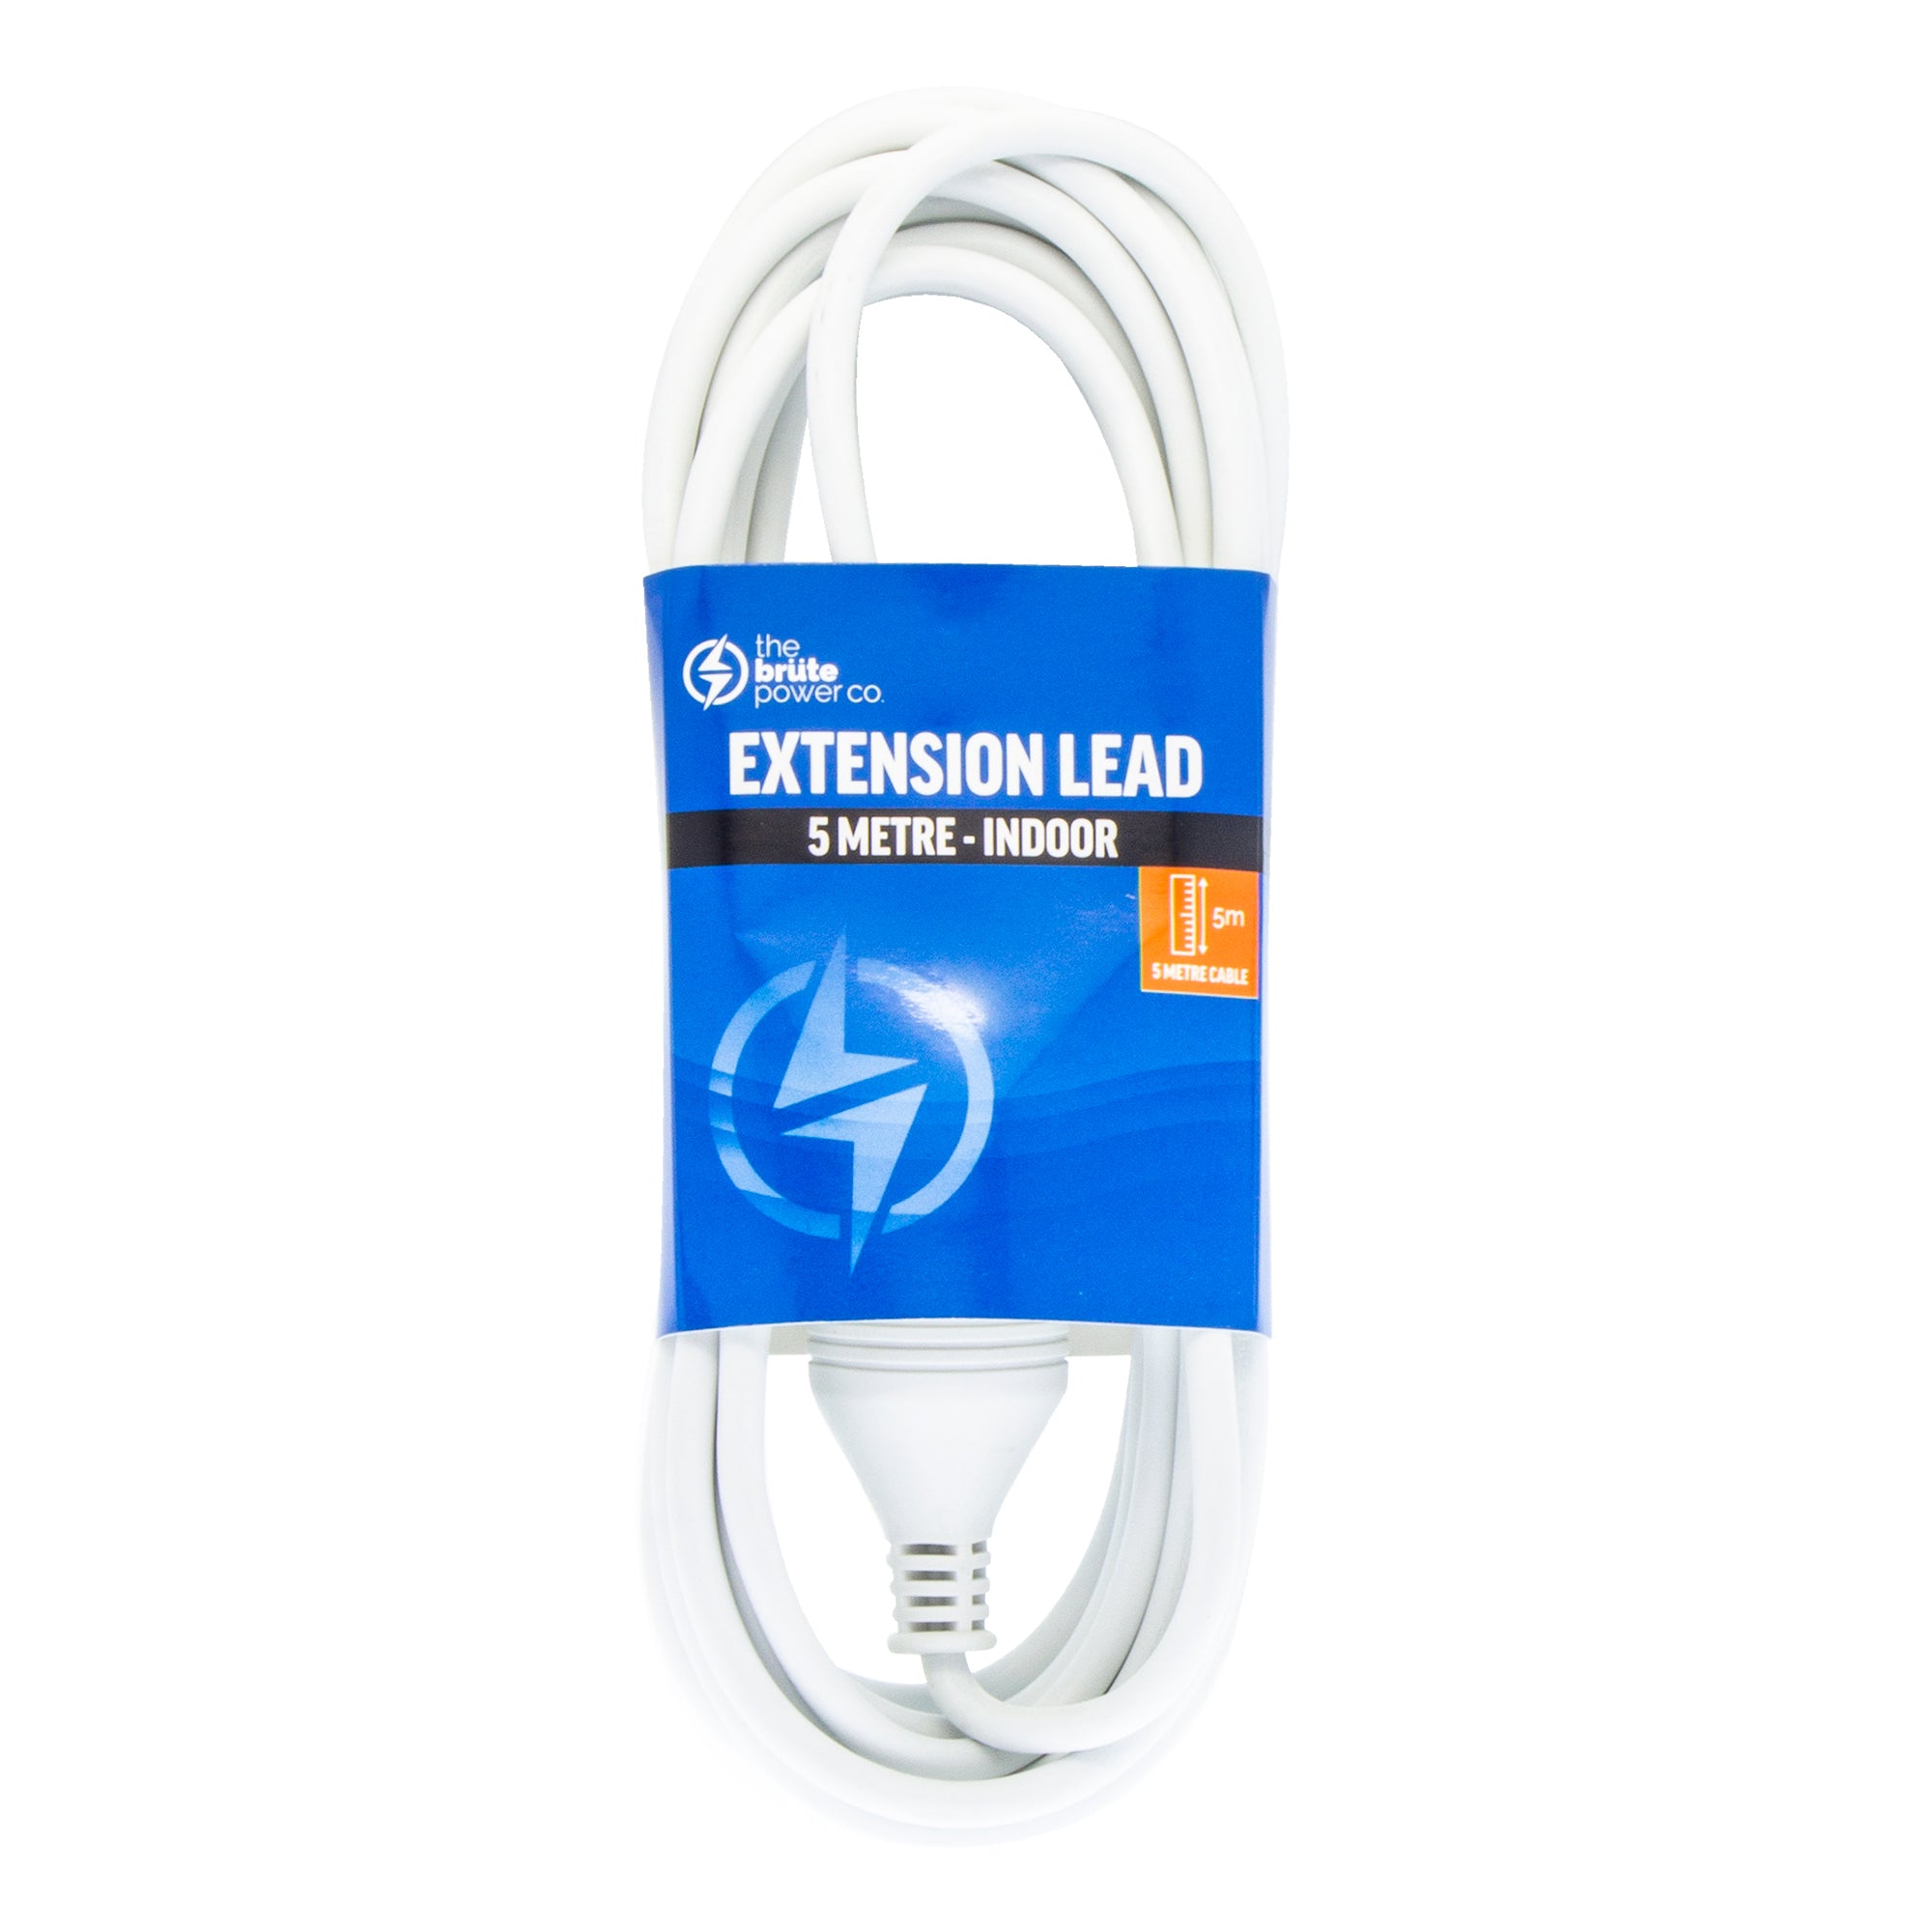 Extension Lead - 5 Metre